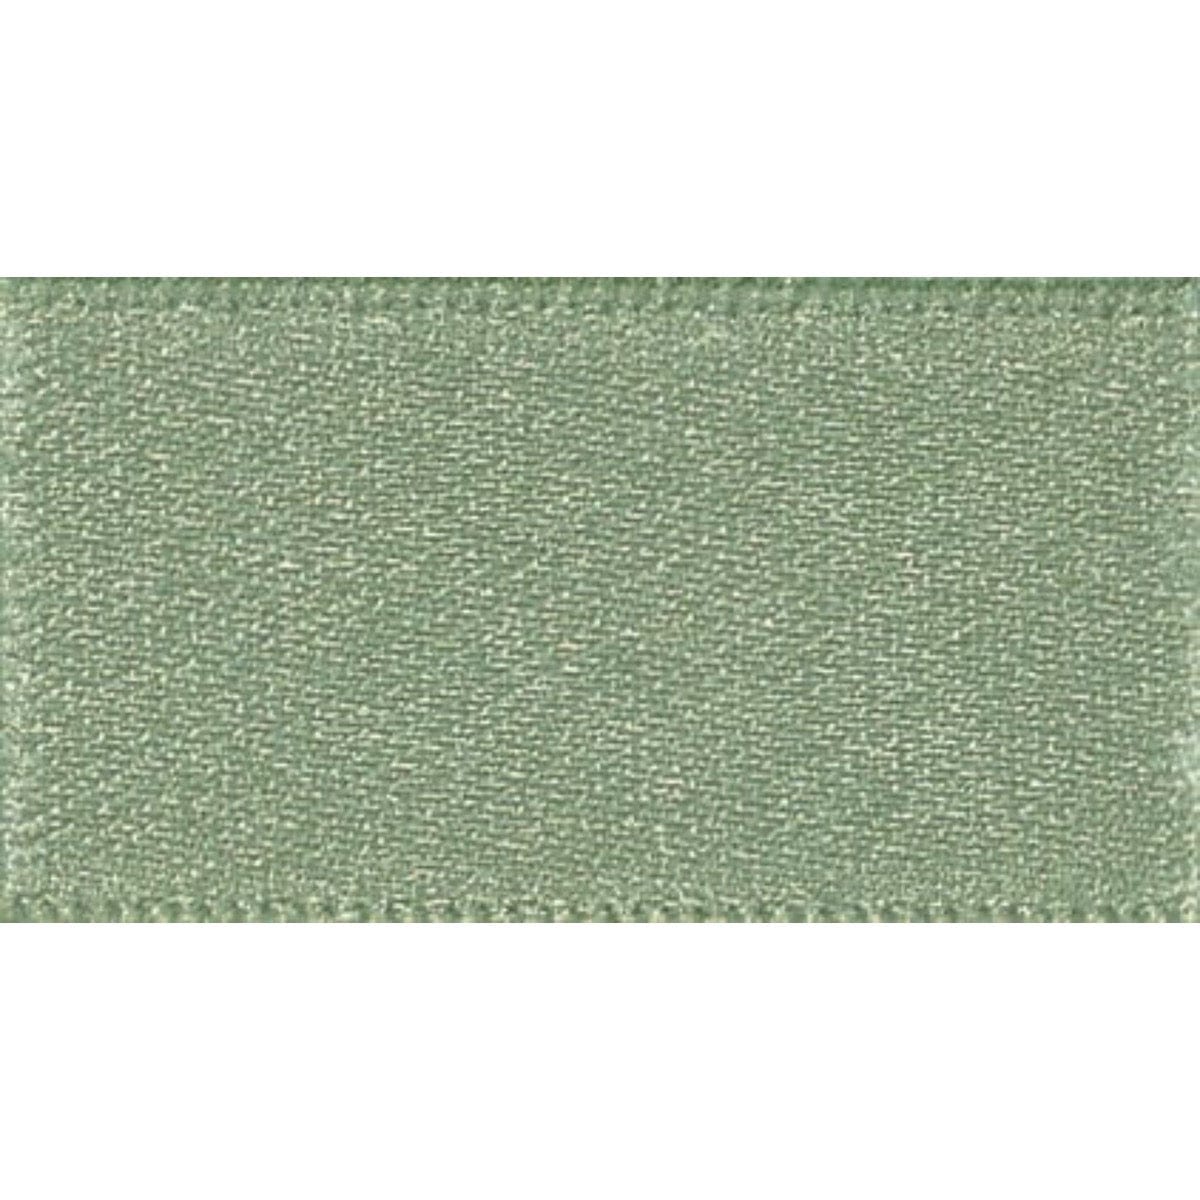 Double Faced Satin Ribbon Khaki Green: 25mm Wide. Price per metre.